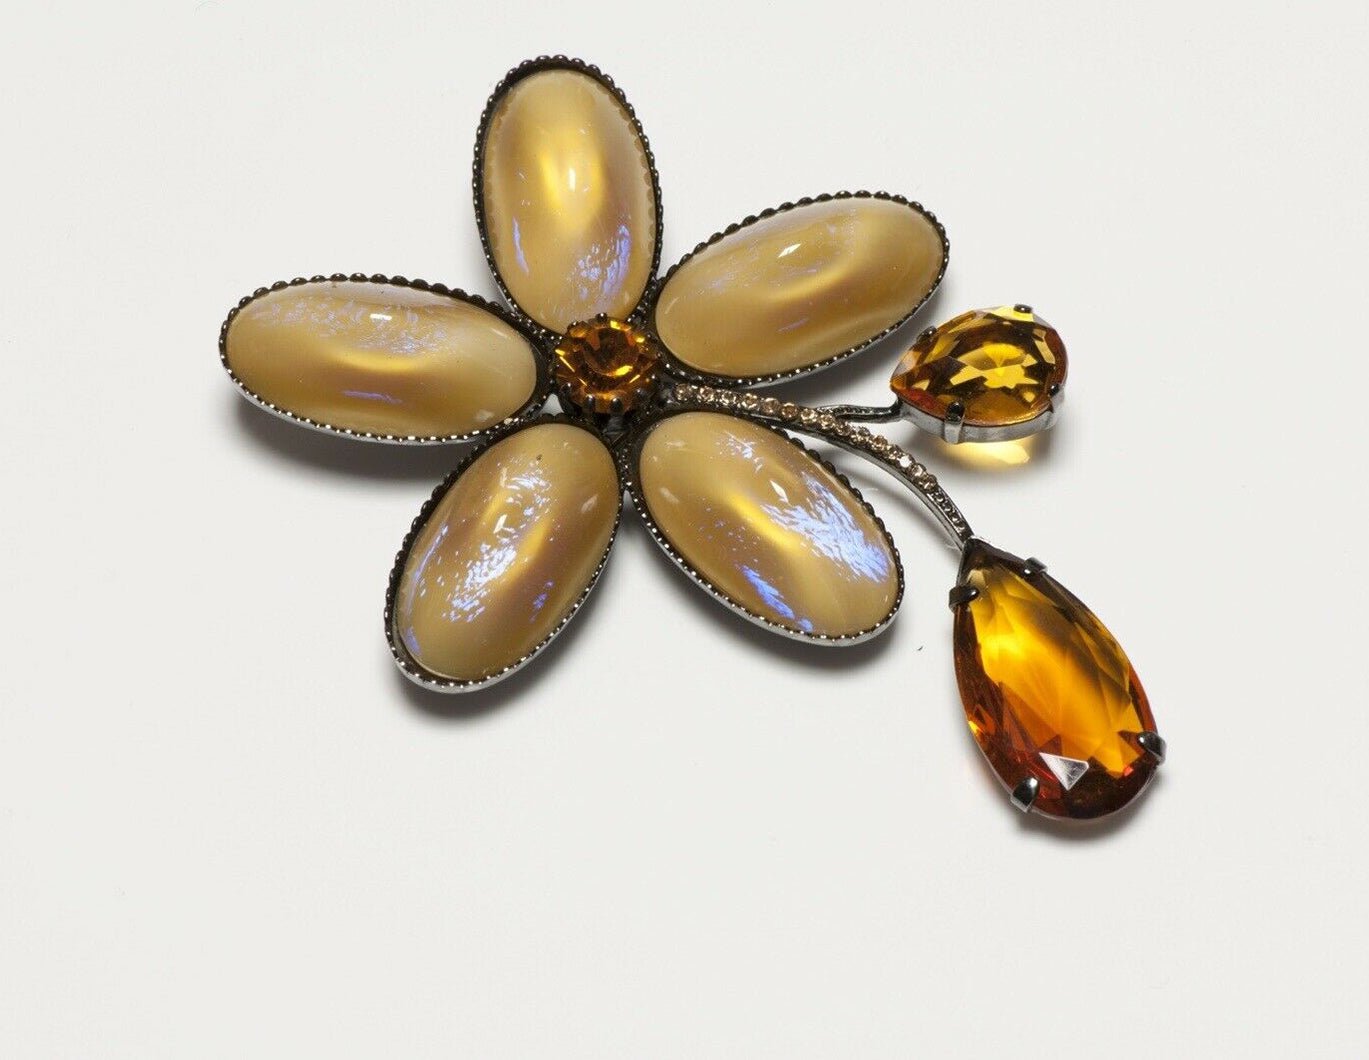 Giorgio Armani Yellow Crystal Poured Glass Flower Brooch